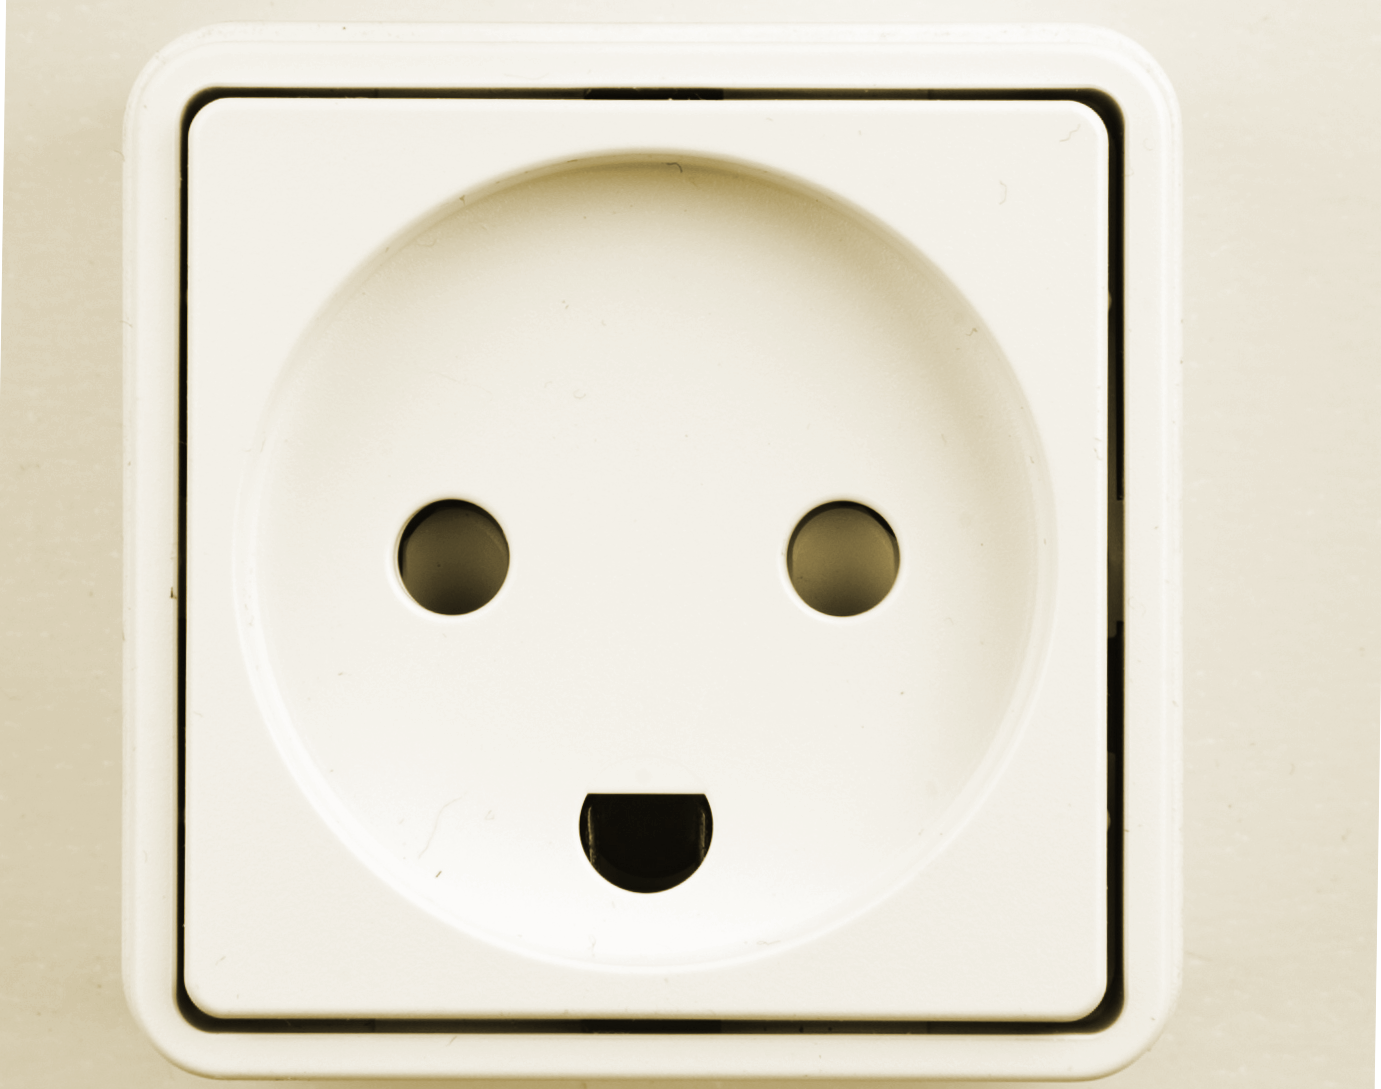 Danish plug sockets look like smiley faces